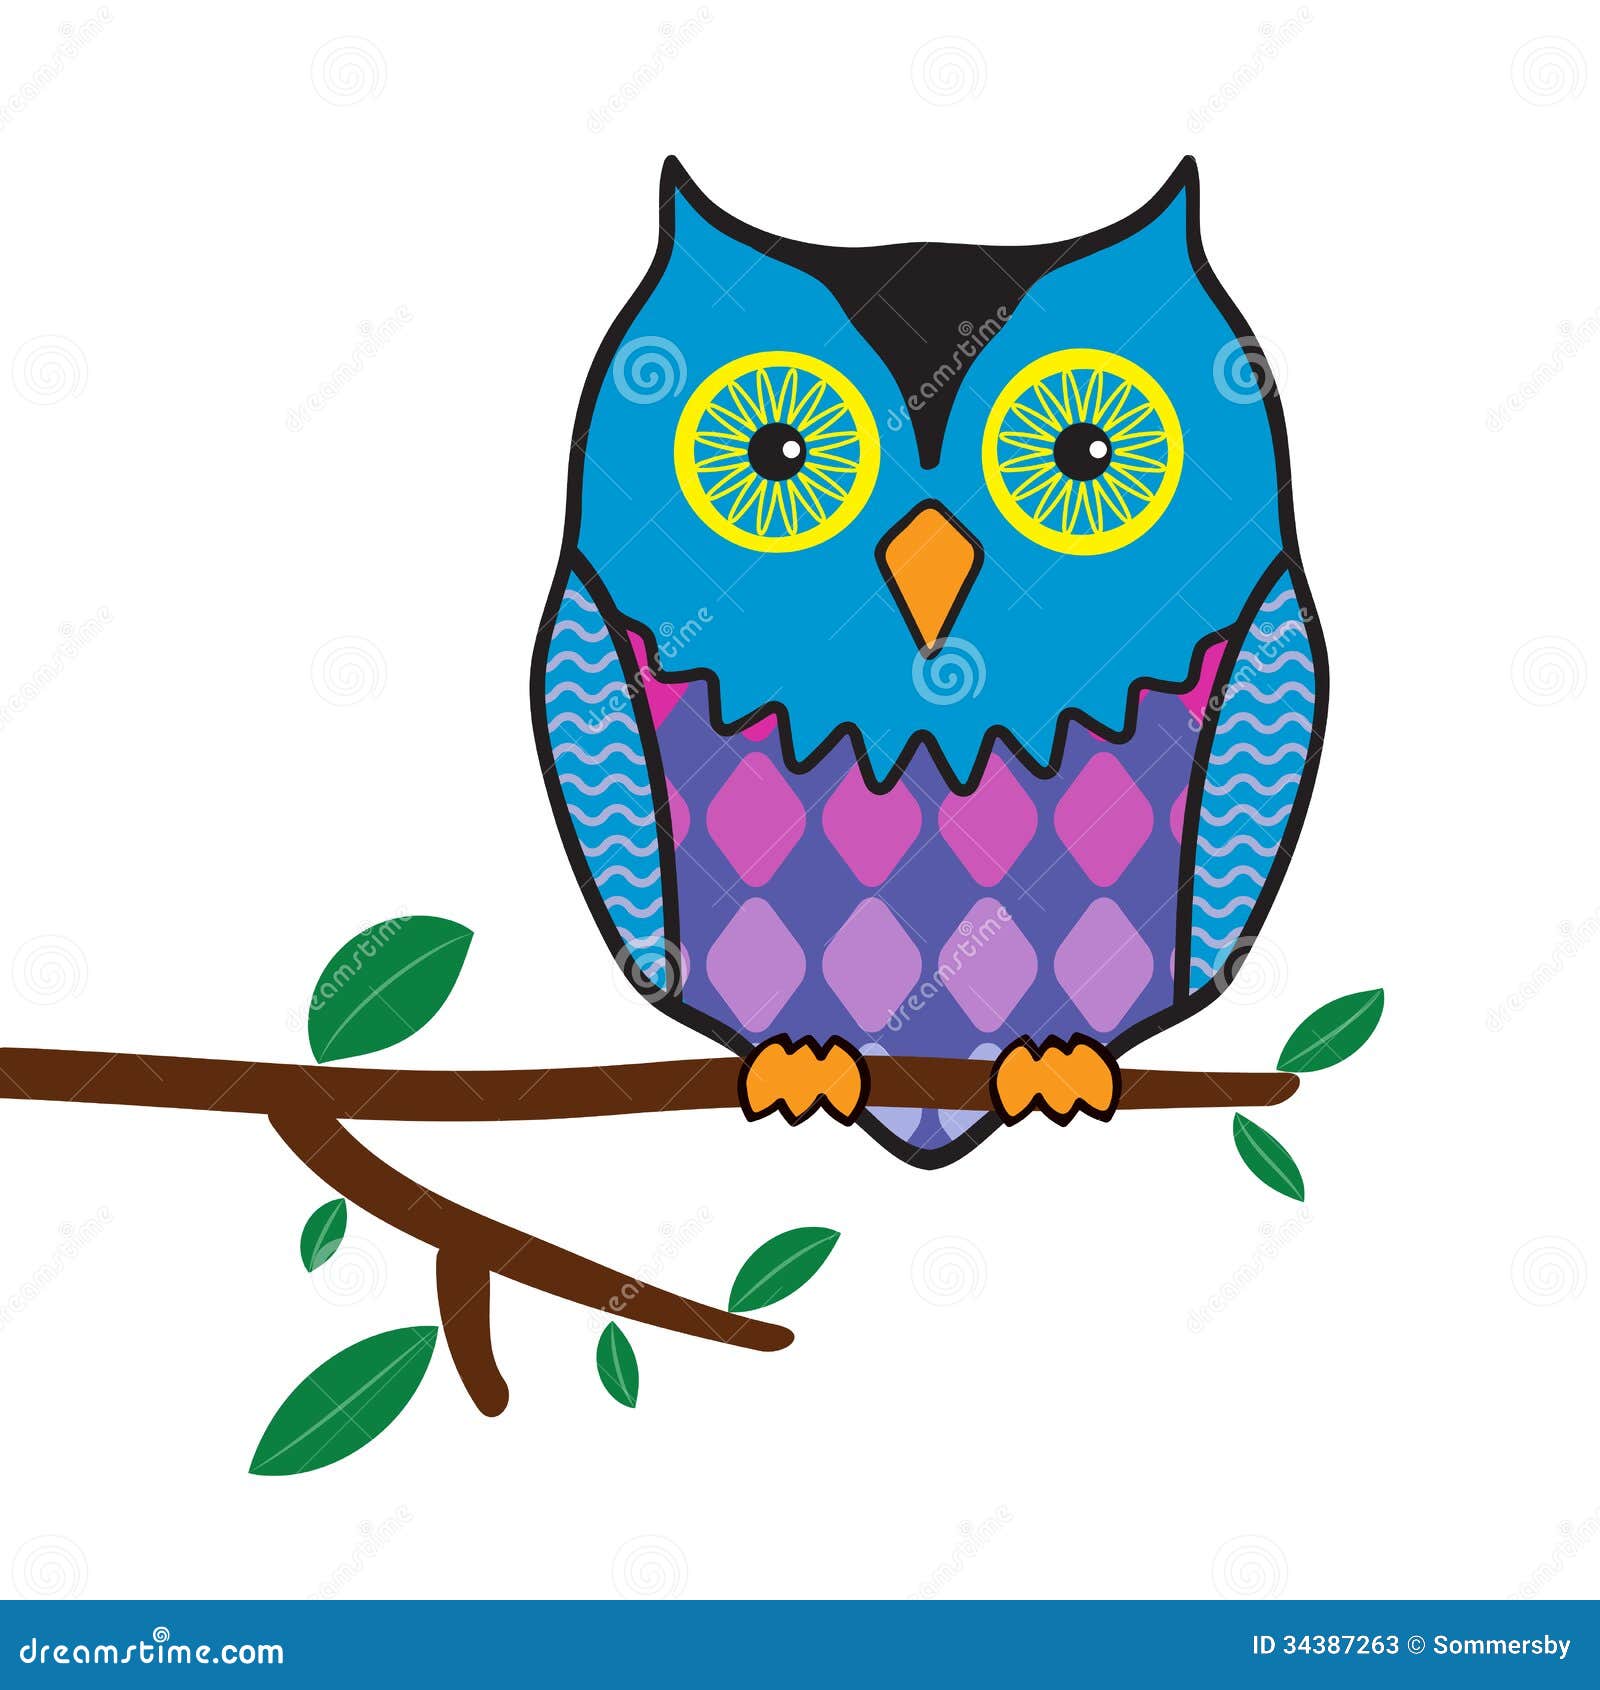 funny owl clip art - photo #49